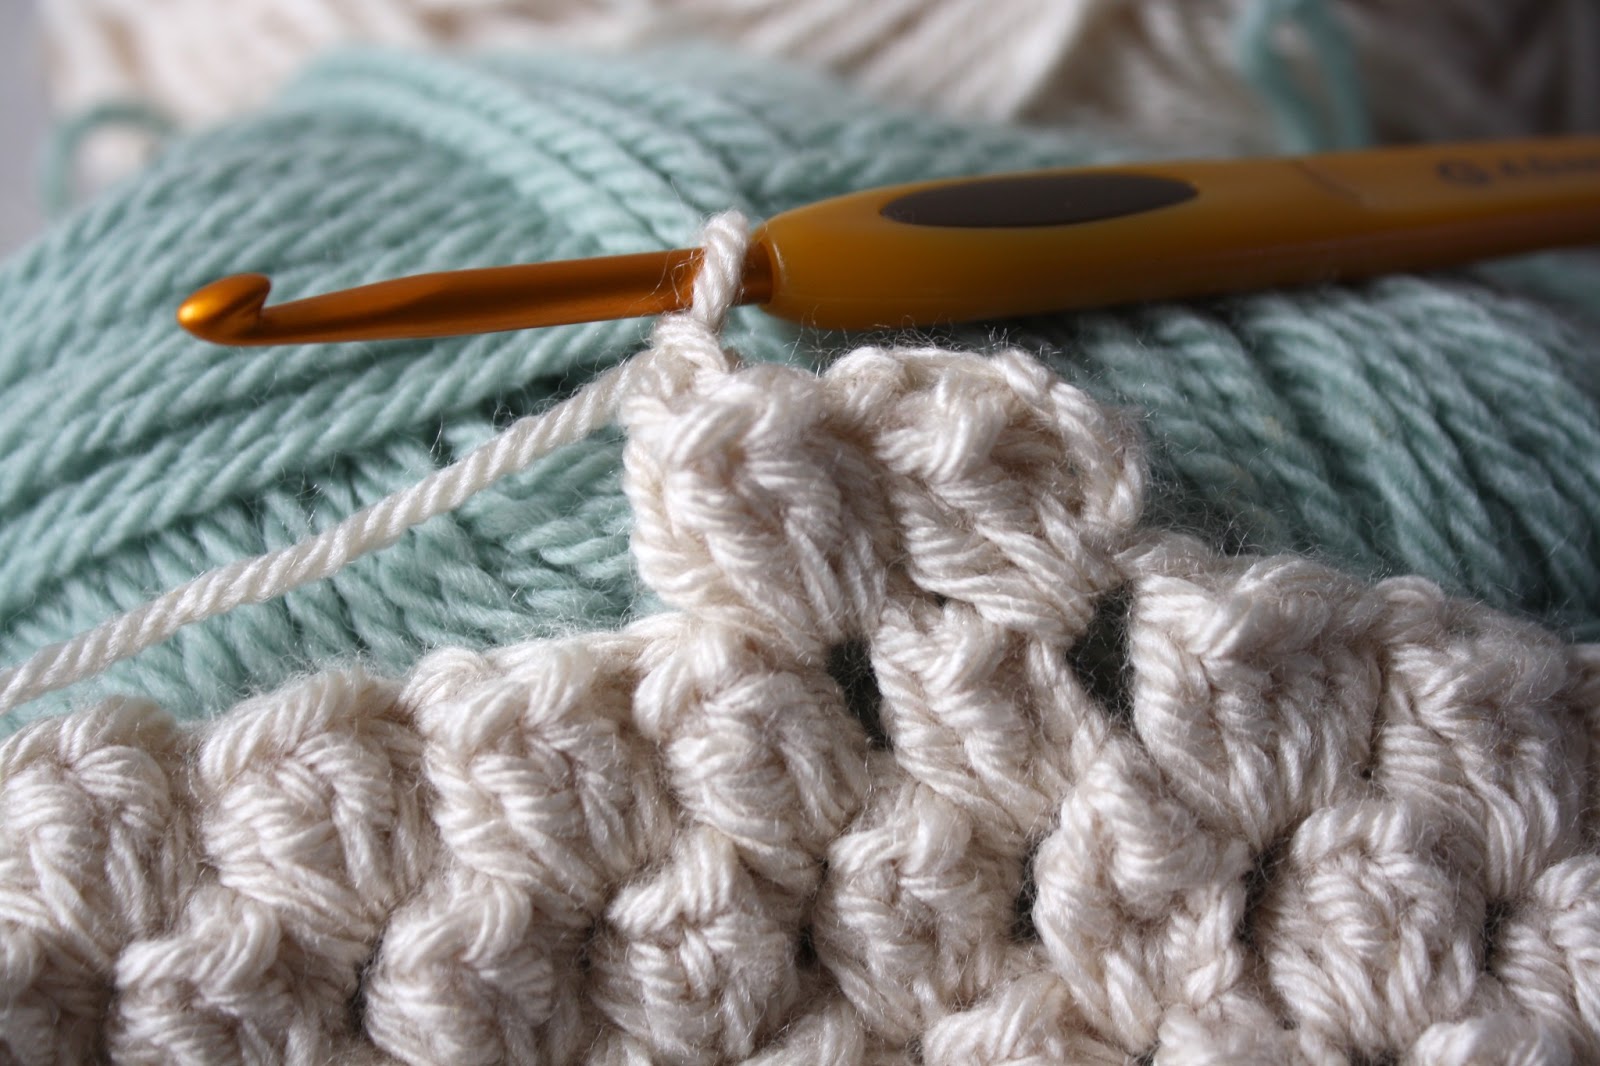 How To Crochet a Heart: Popcorn Stitch Tutorial